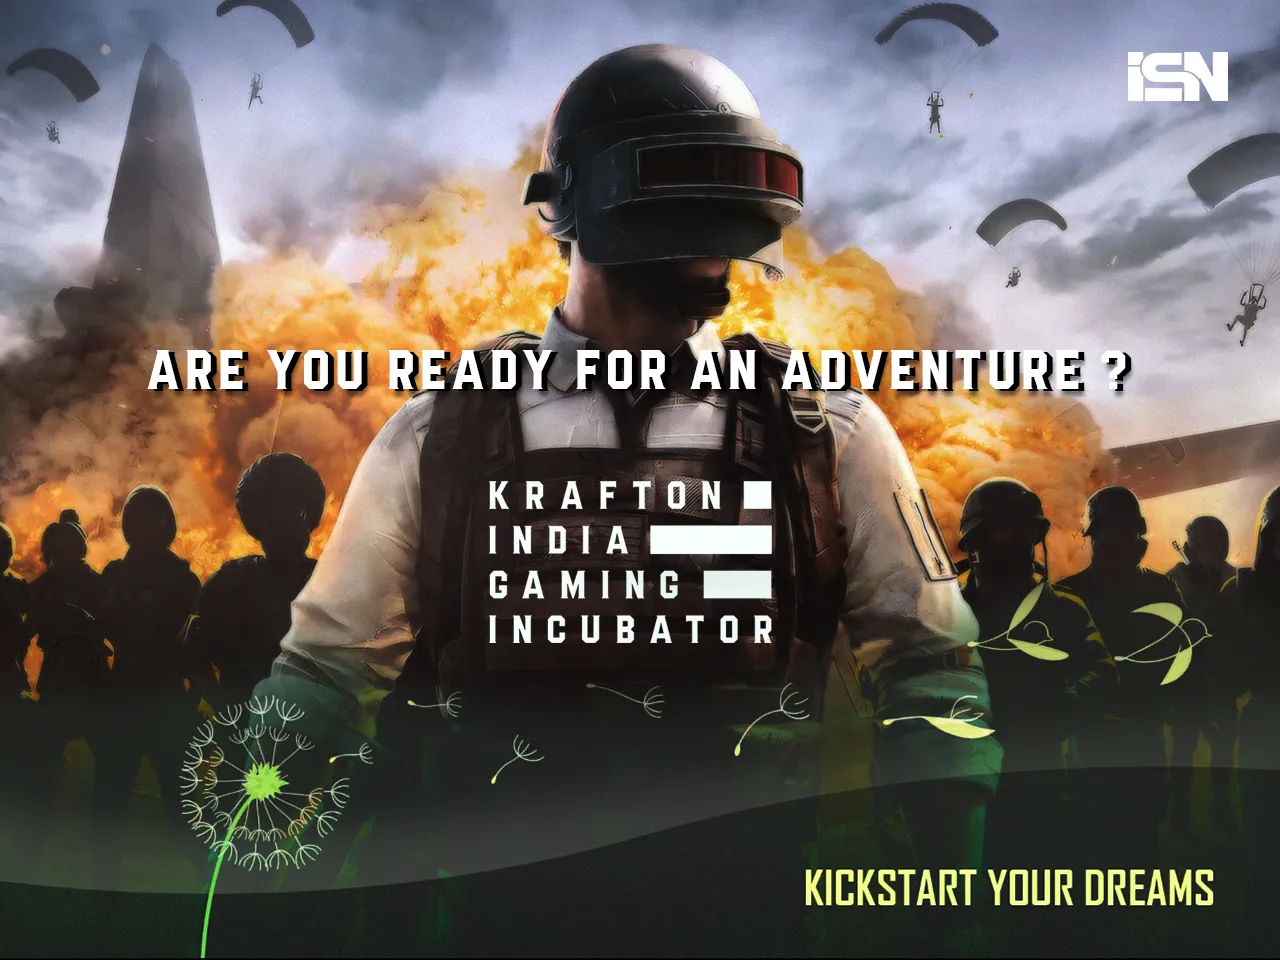 Krafton launched gaming incubator